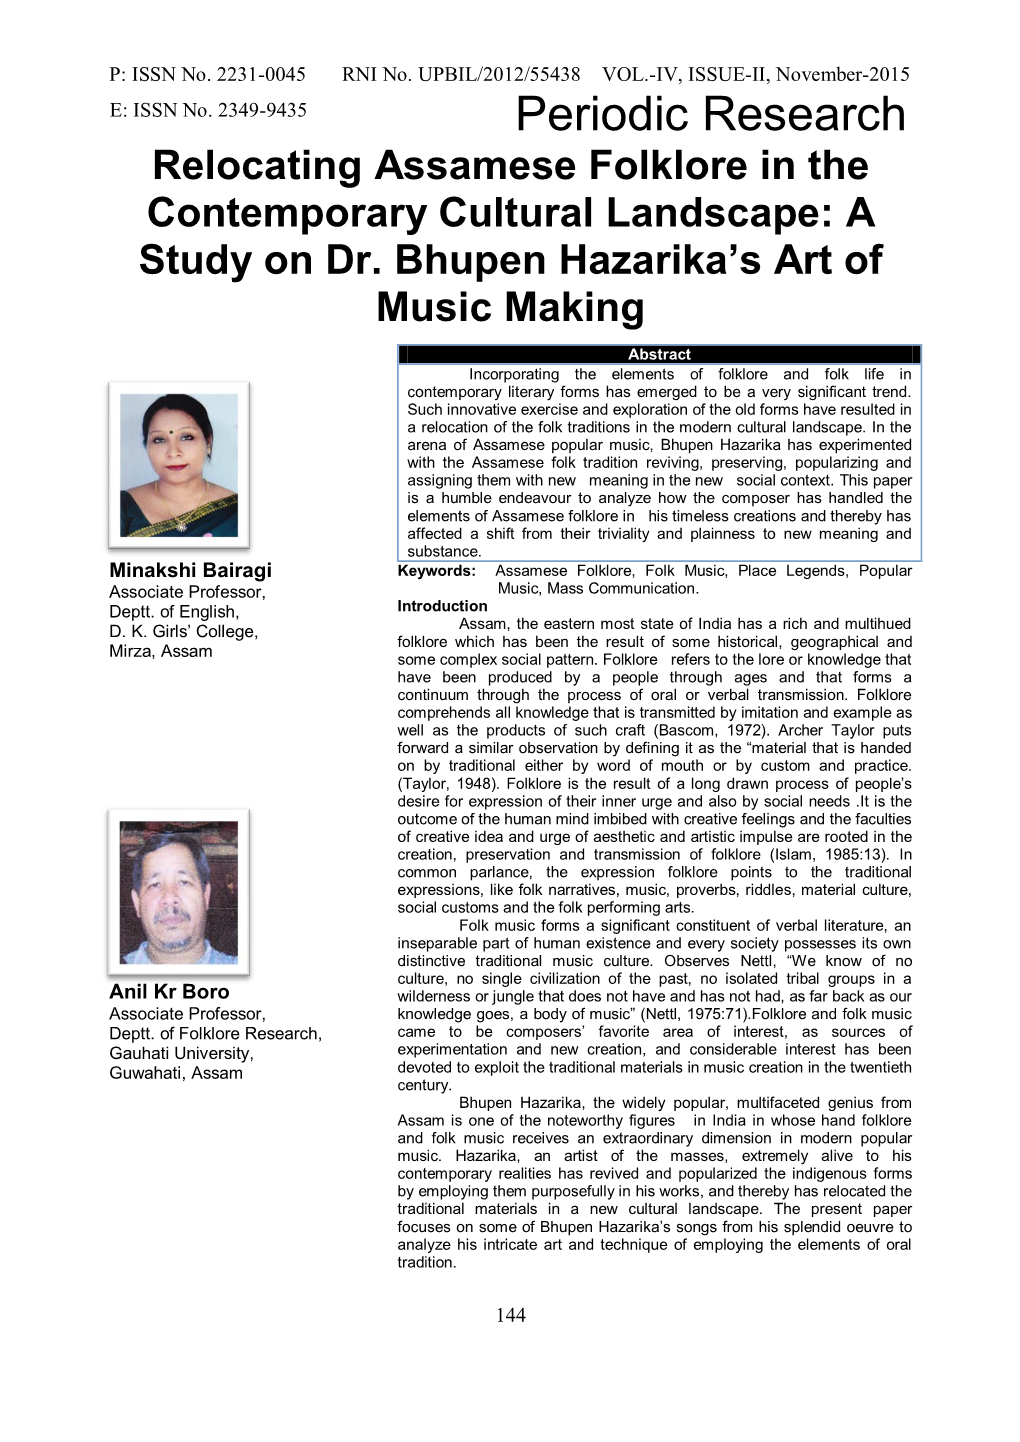 A Study on Dr. Bhupen Hazarika's Art of Music Making